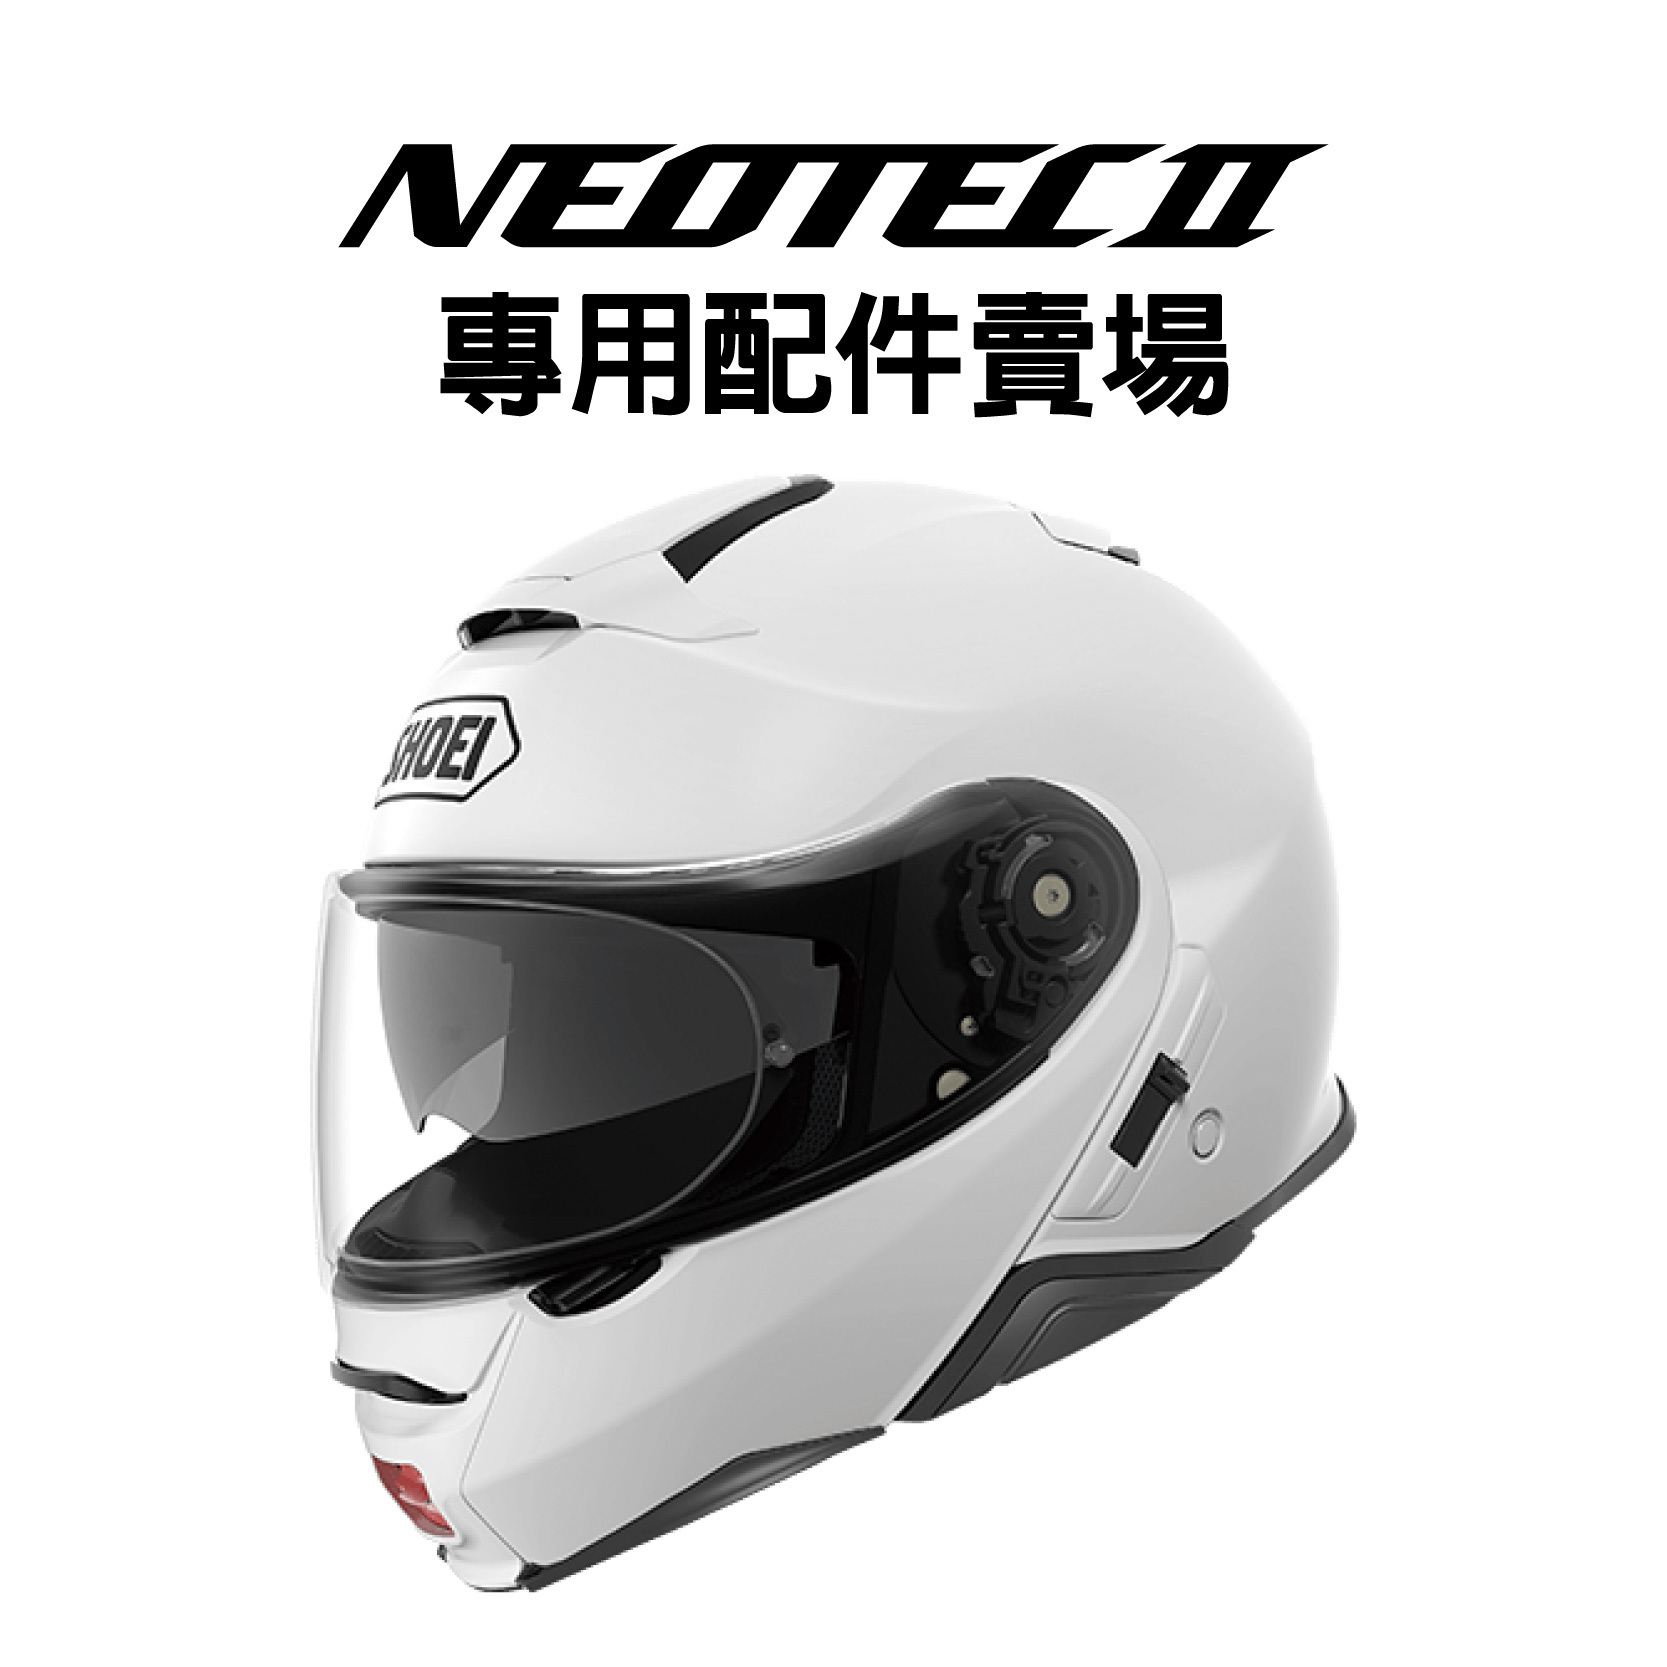 SHOEI NEOTEC II 專用配件賣場|安信騎士